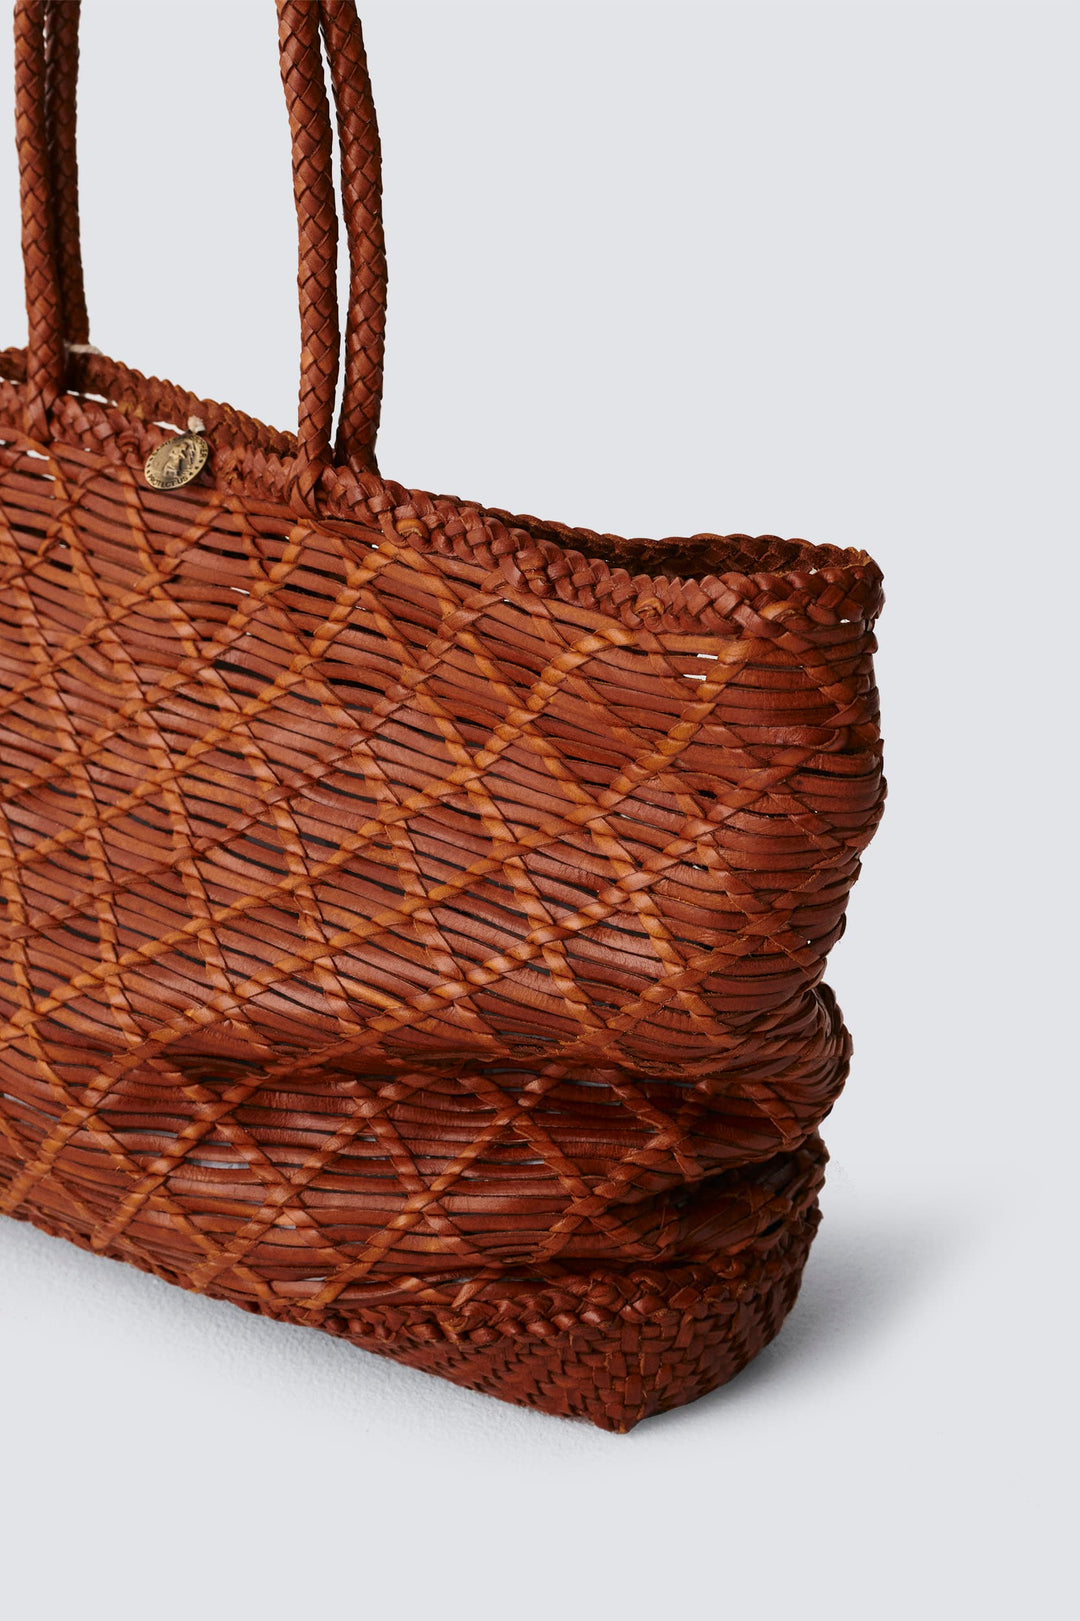 Dragon Diffusion woven leather bag handmade - EW Corso Tan